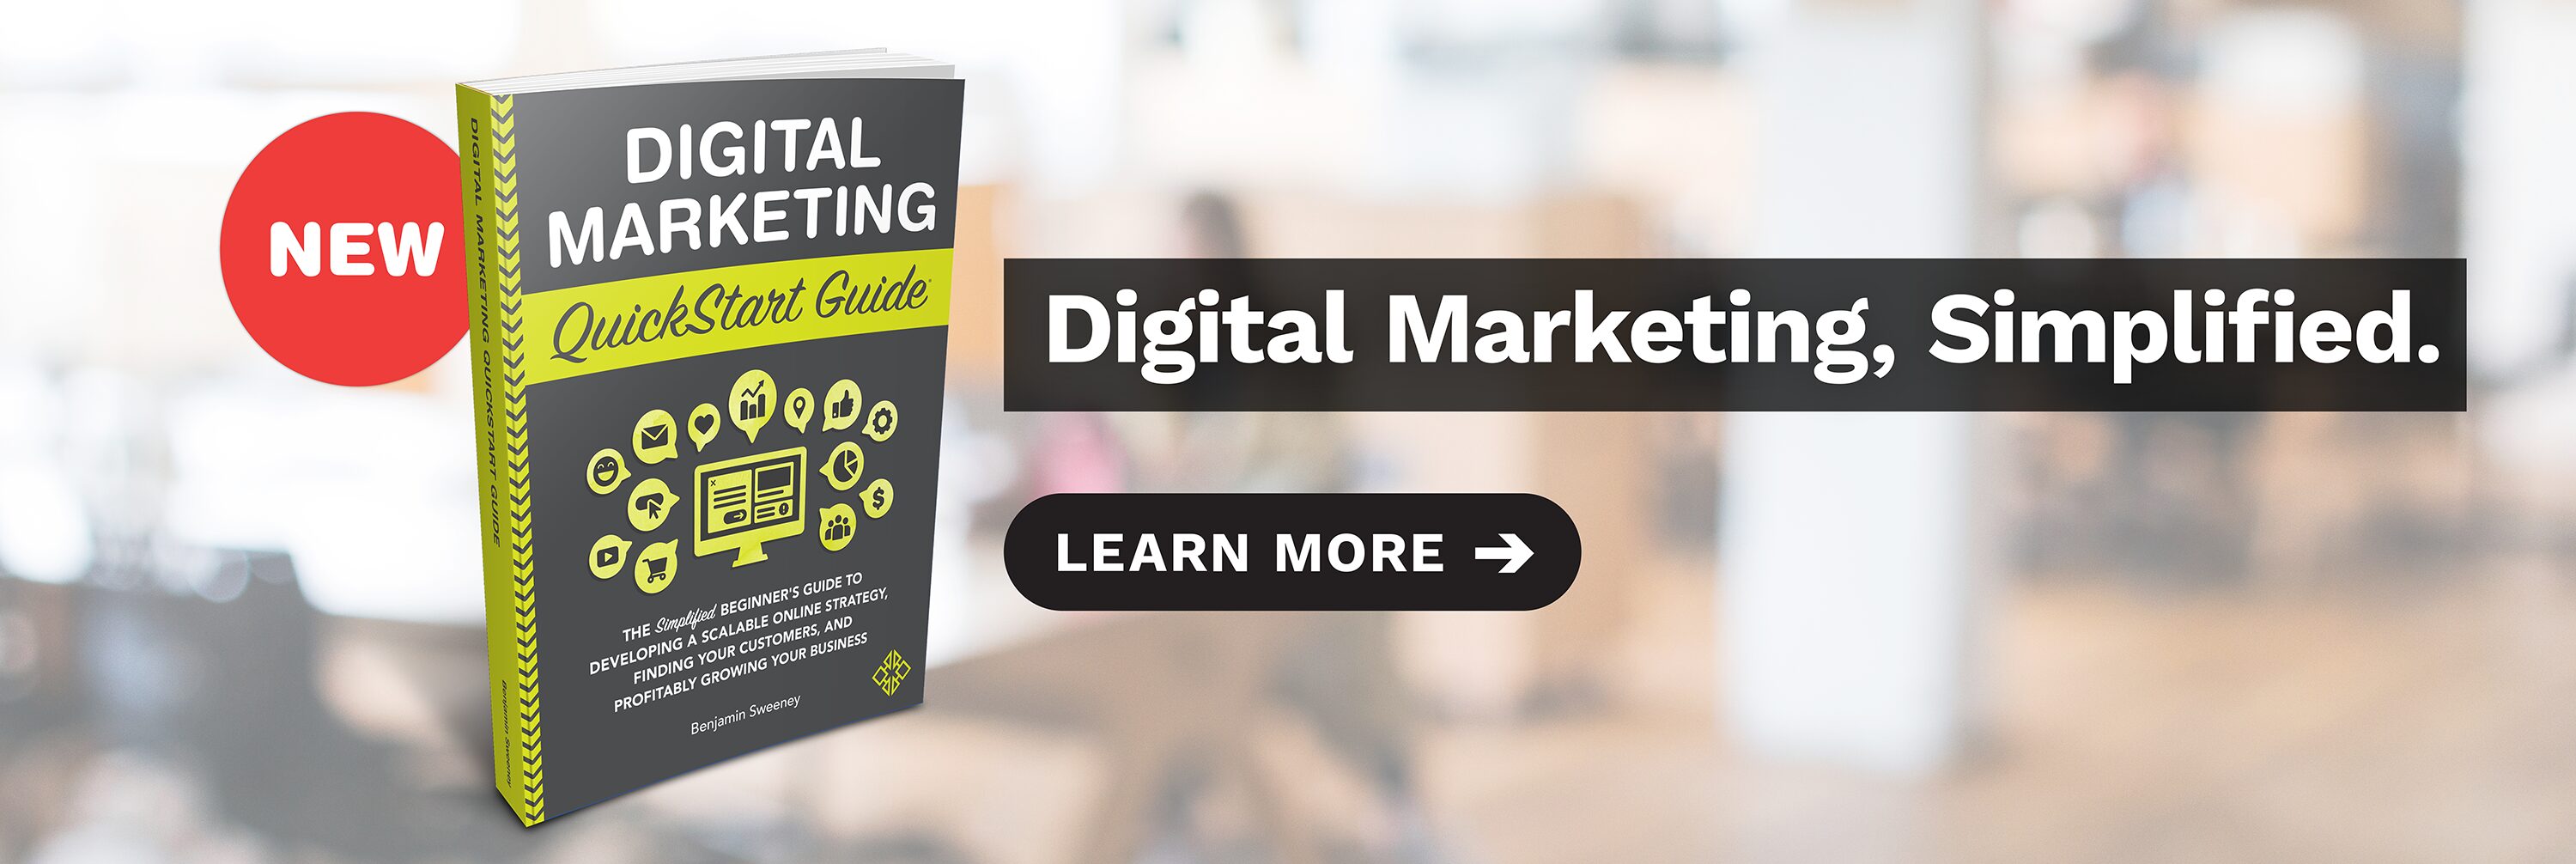 New! Digital Marketing QuickStart Guide by veteran digital marketer Benjamin Sweeney